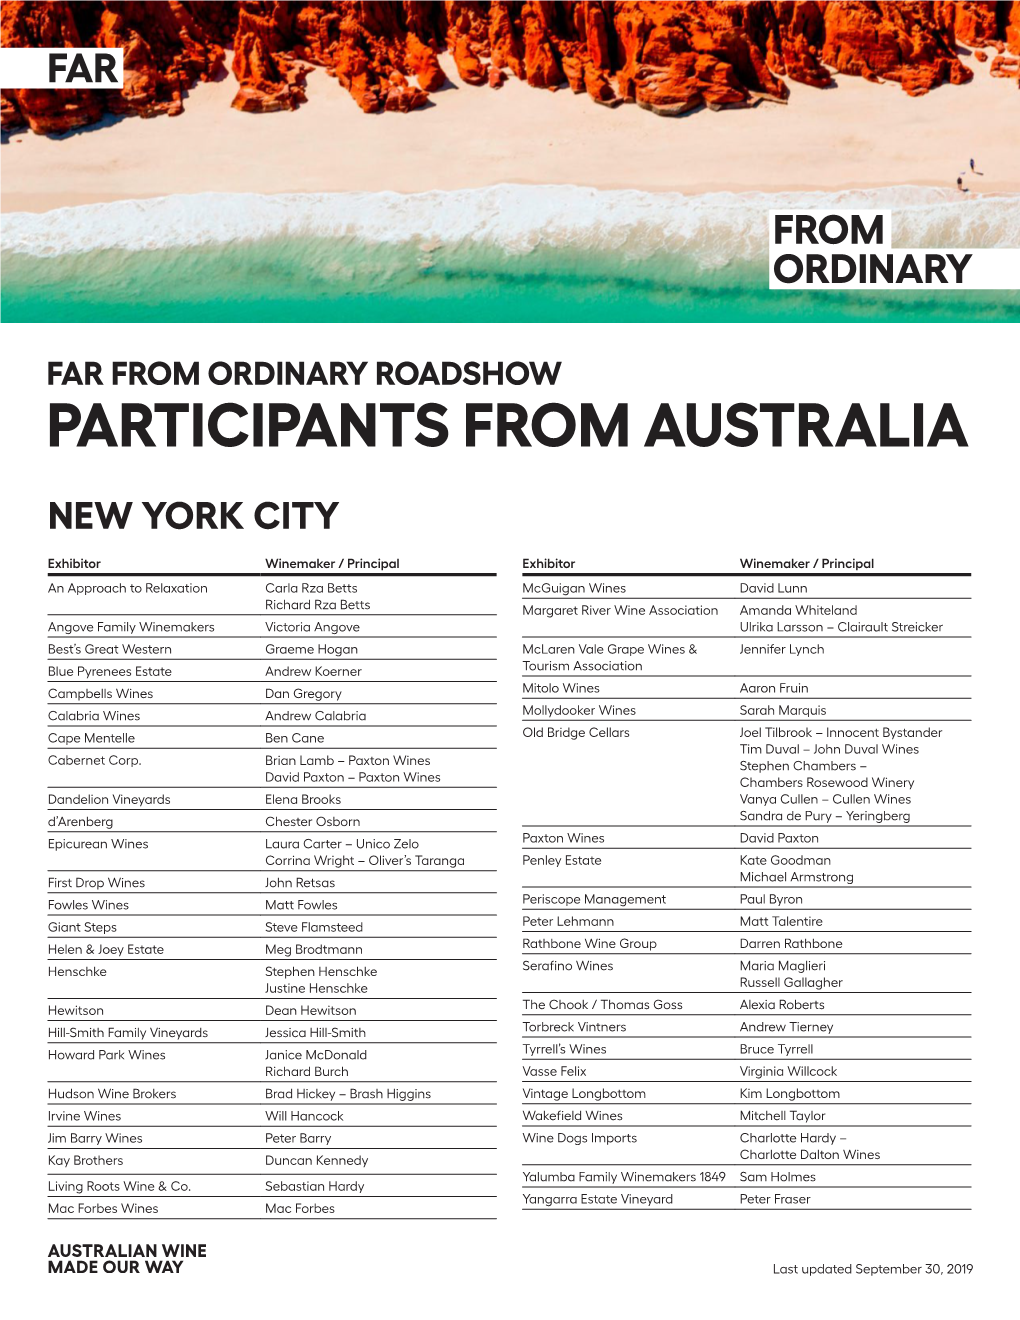 Participants from Australia